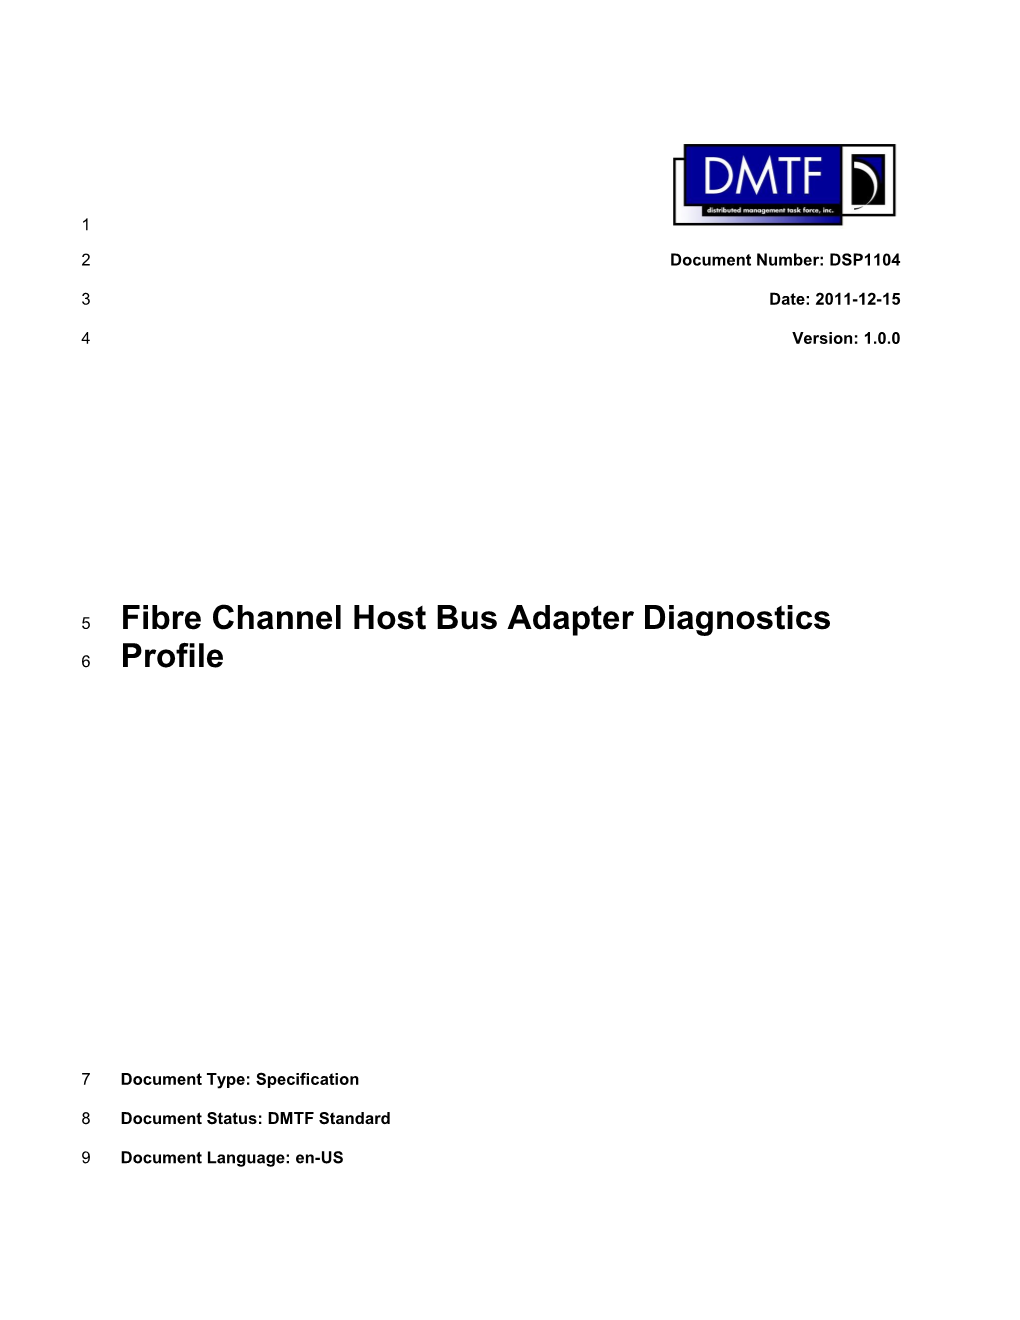 Fibre Channel Host Bus Adapter Diagnostics Profile DSP1104